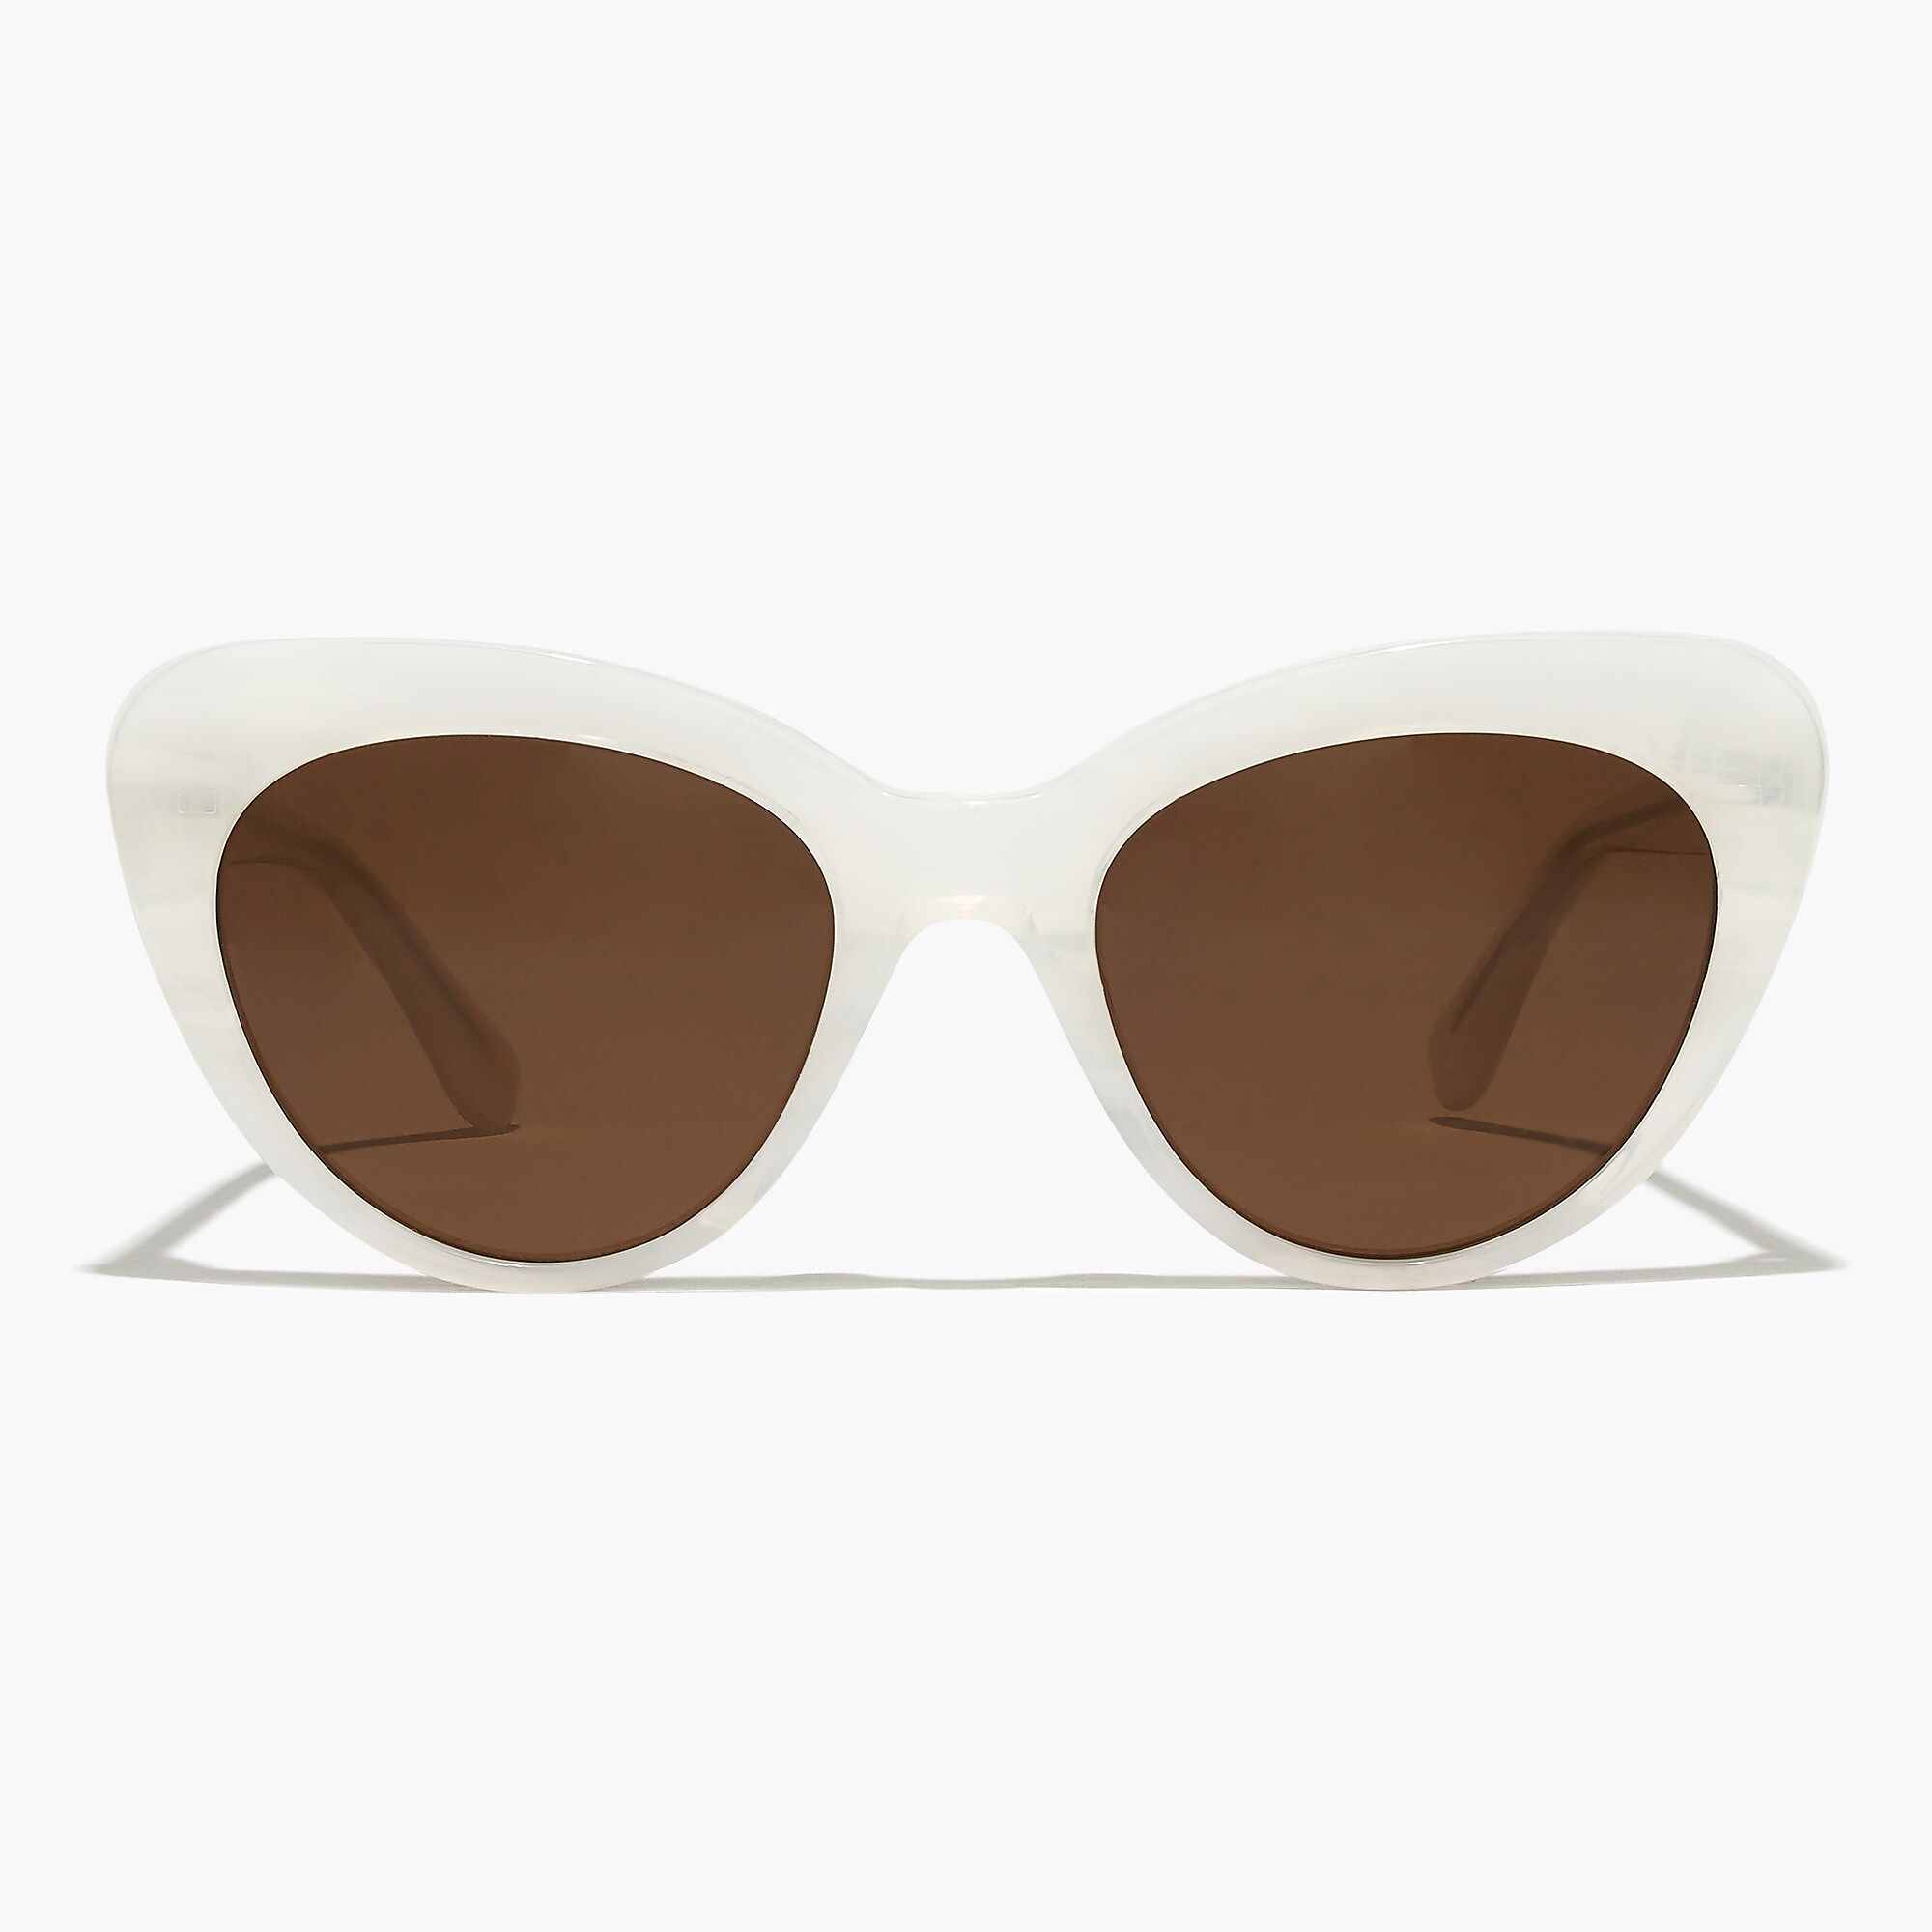 Veranda cateye sunglasses | J.Crew US